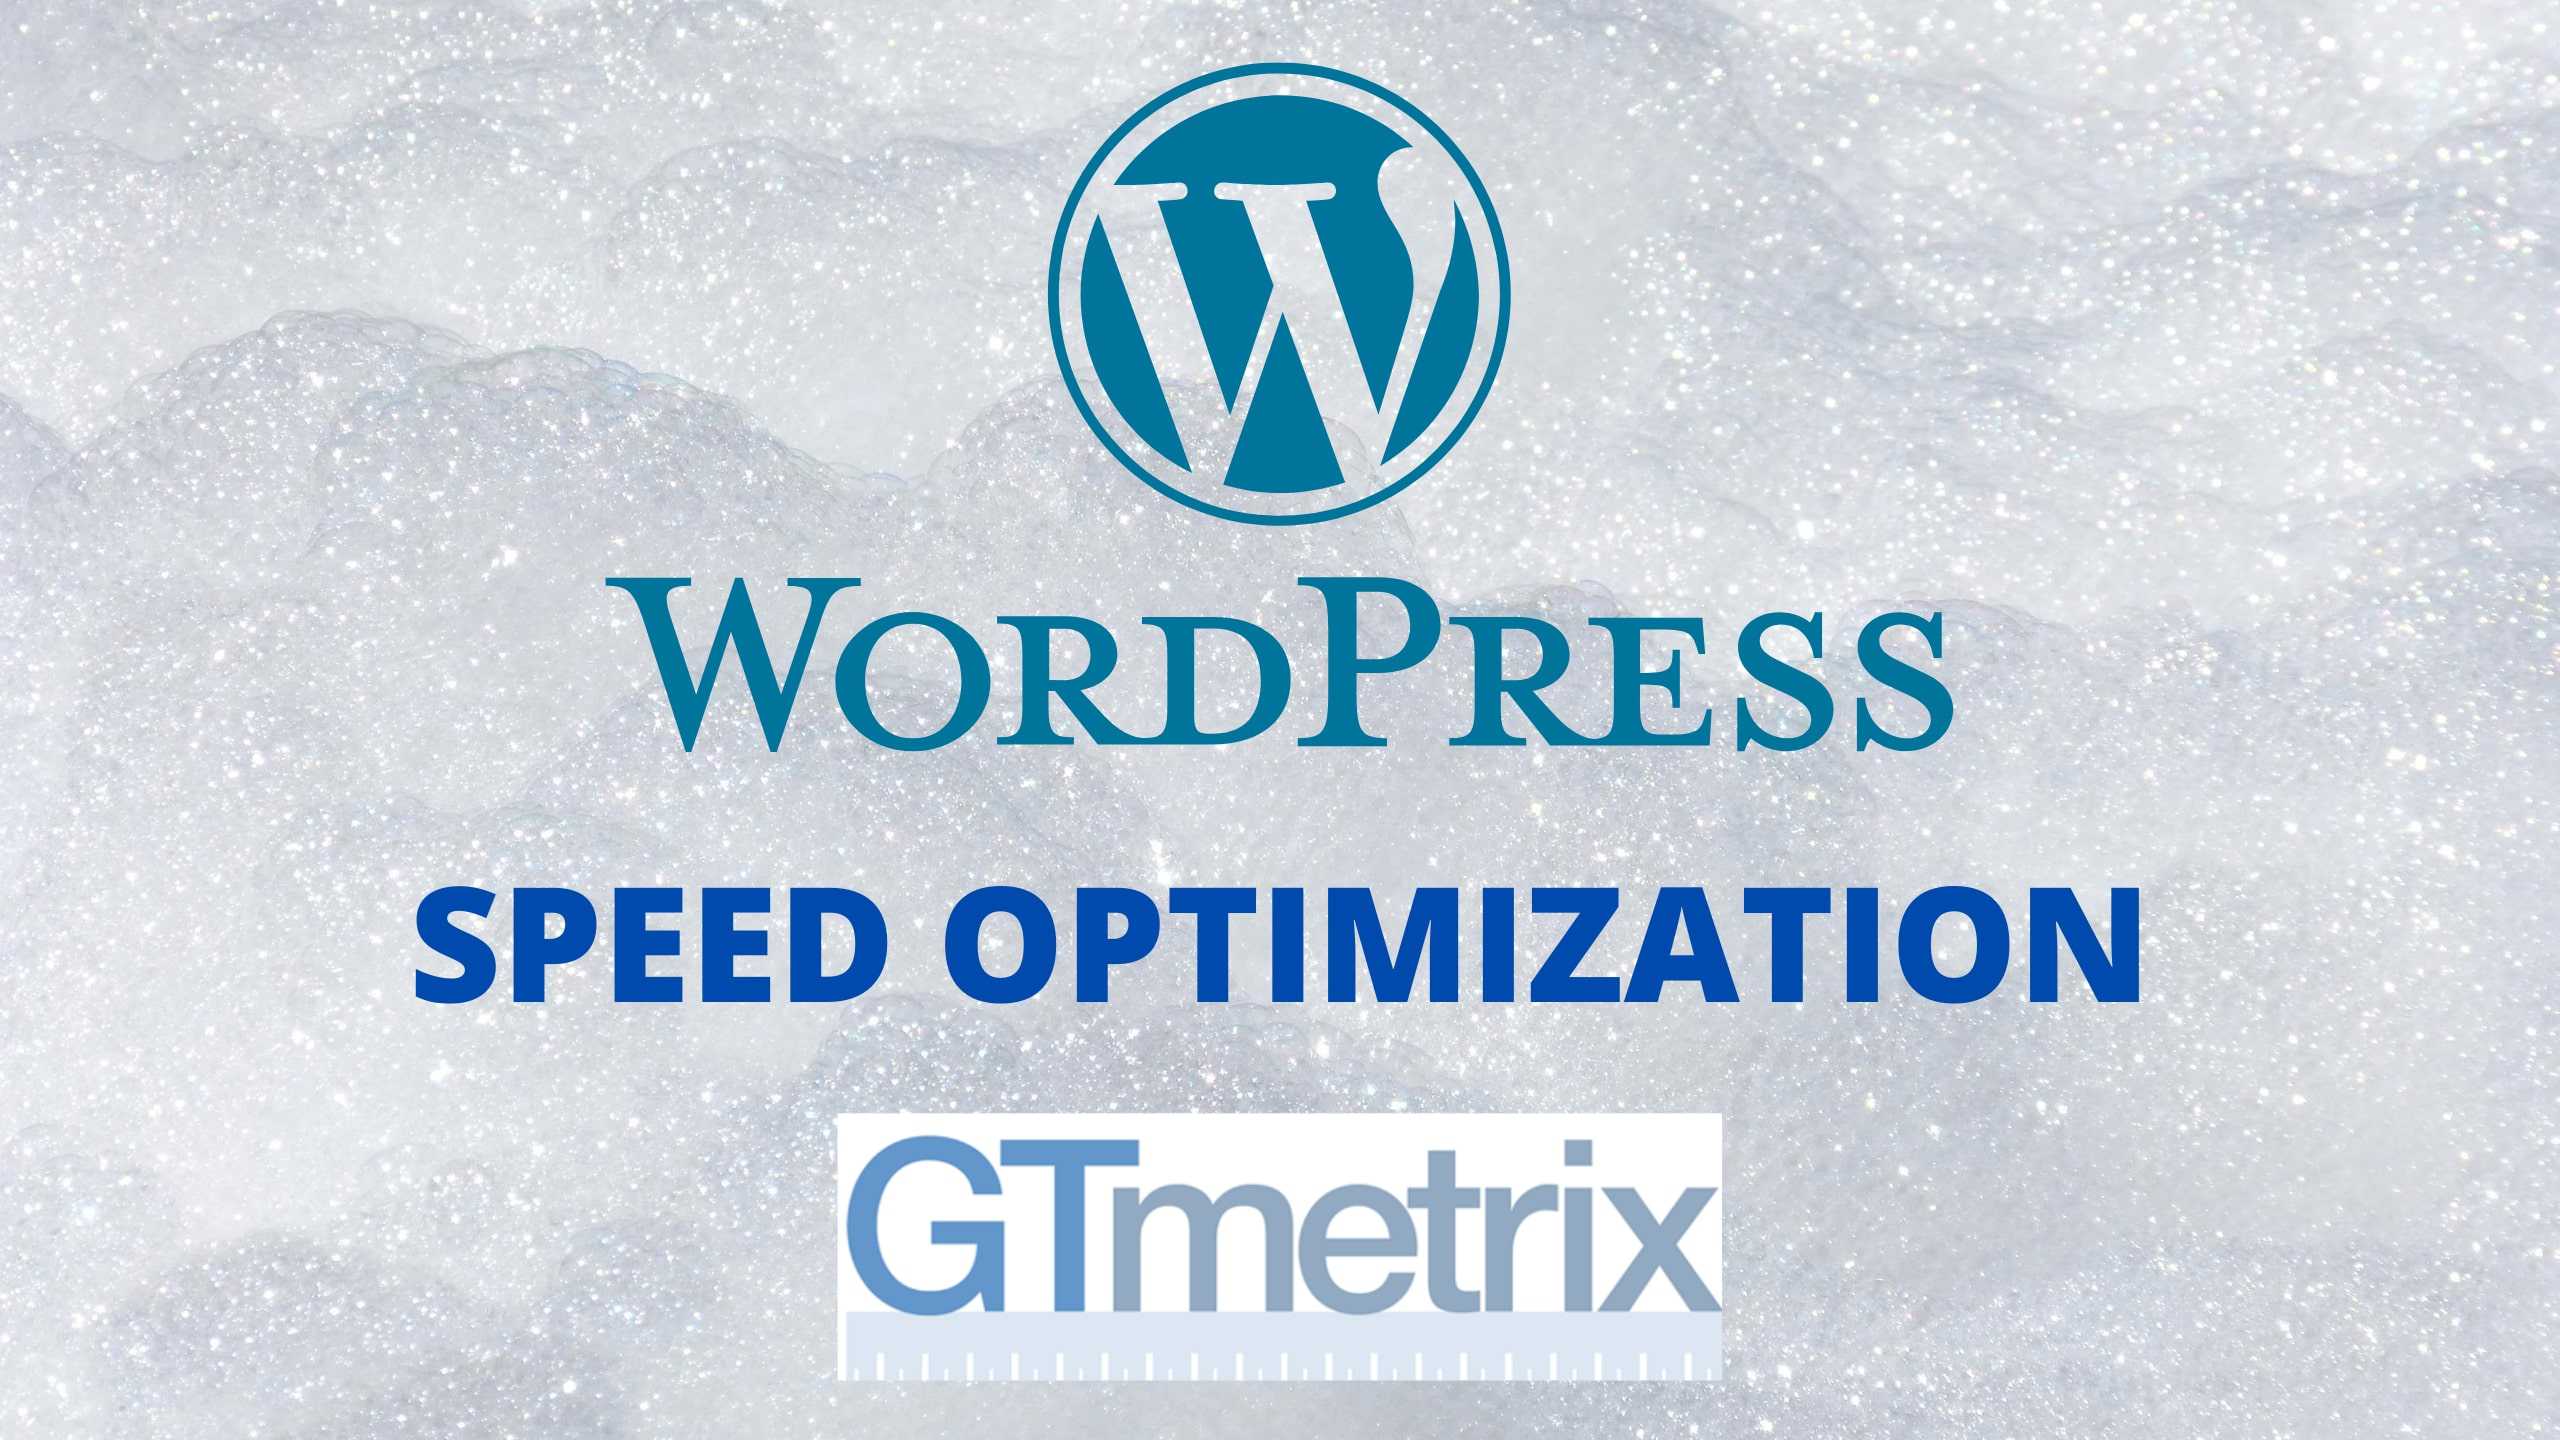 speed-up-wordpress-website